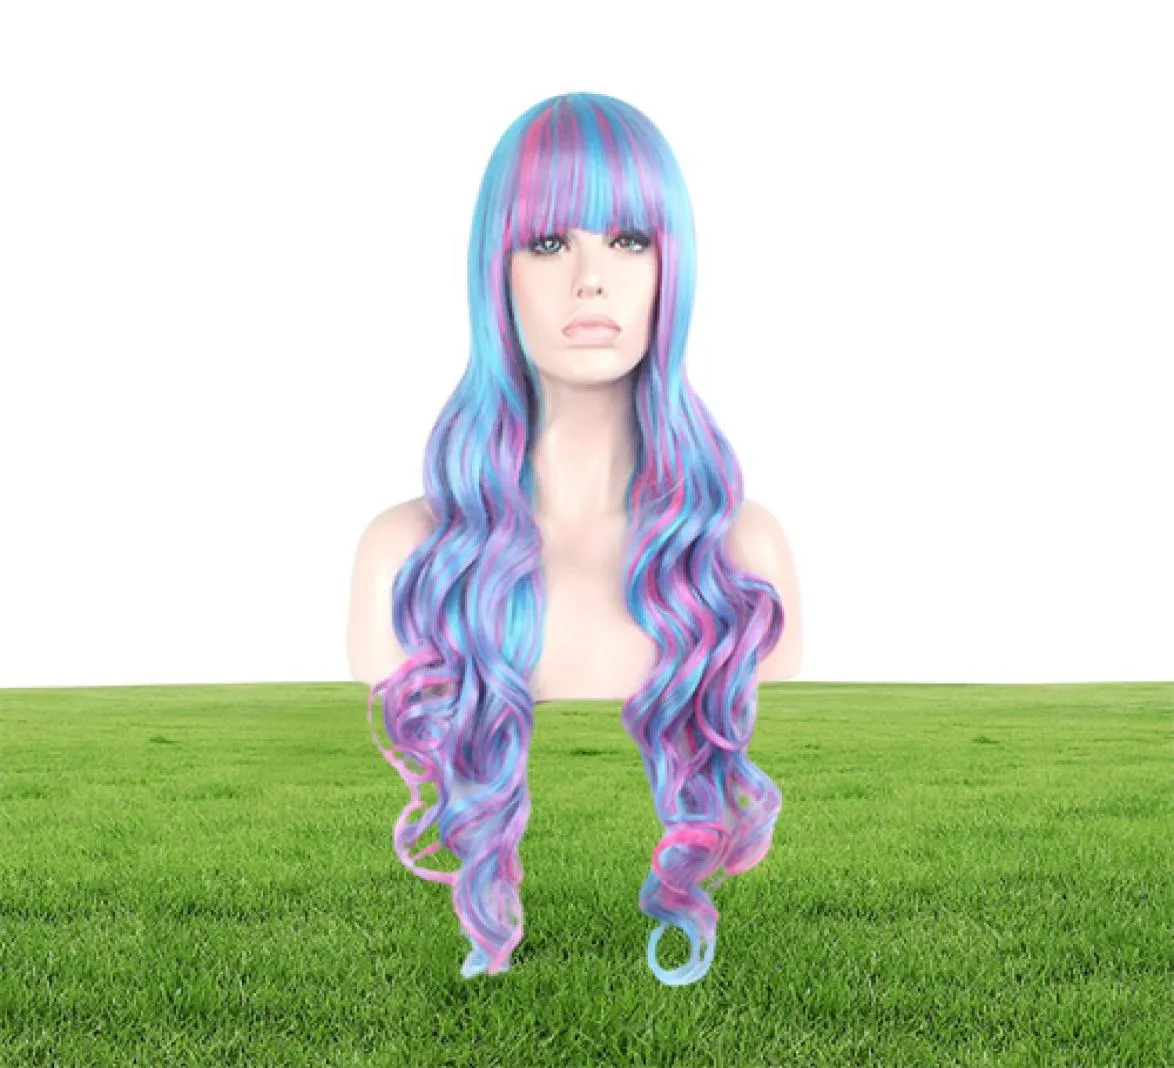 Woodfestival longo encaracolado peruca ombre fibra sintética perucas de cabelo azul rosa mix cor lolita peruca cosplay feminino franja 80cm2692211